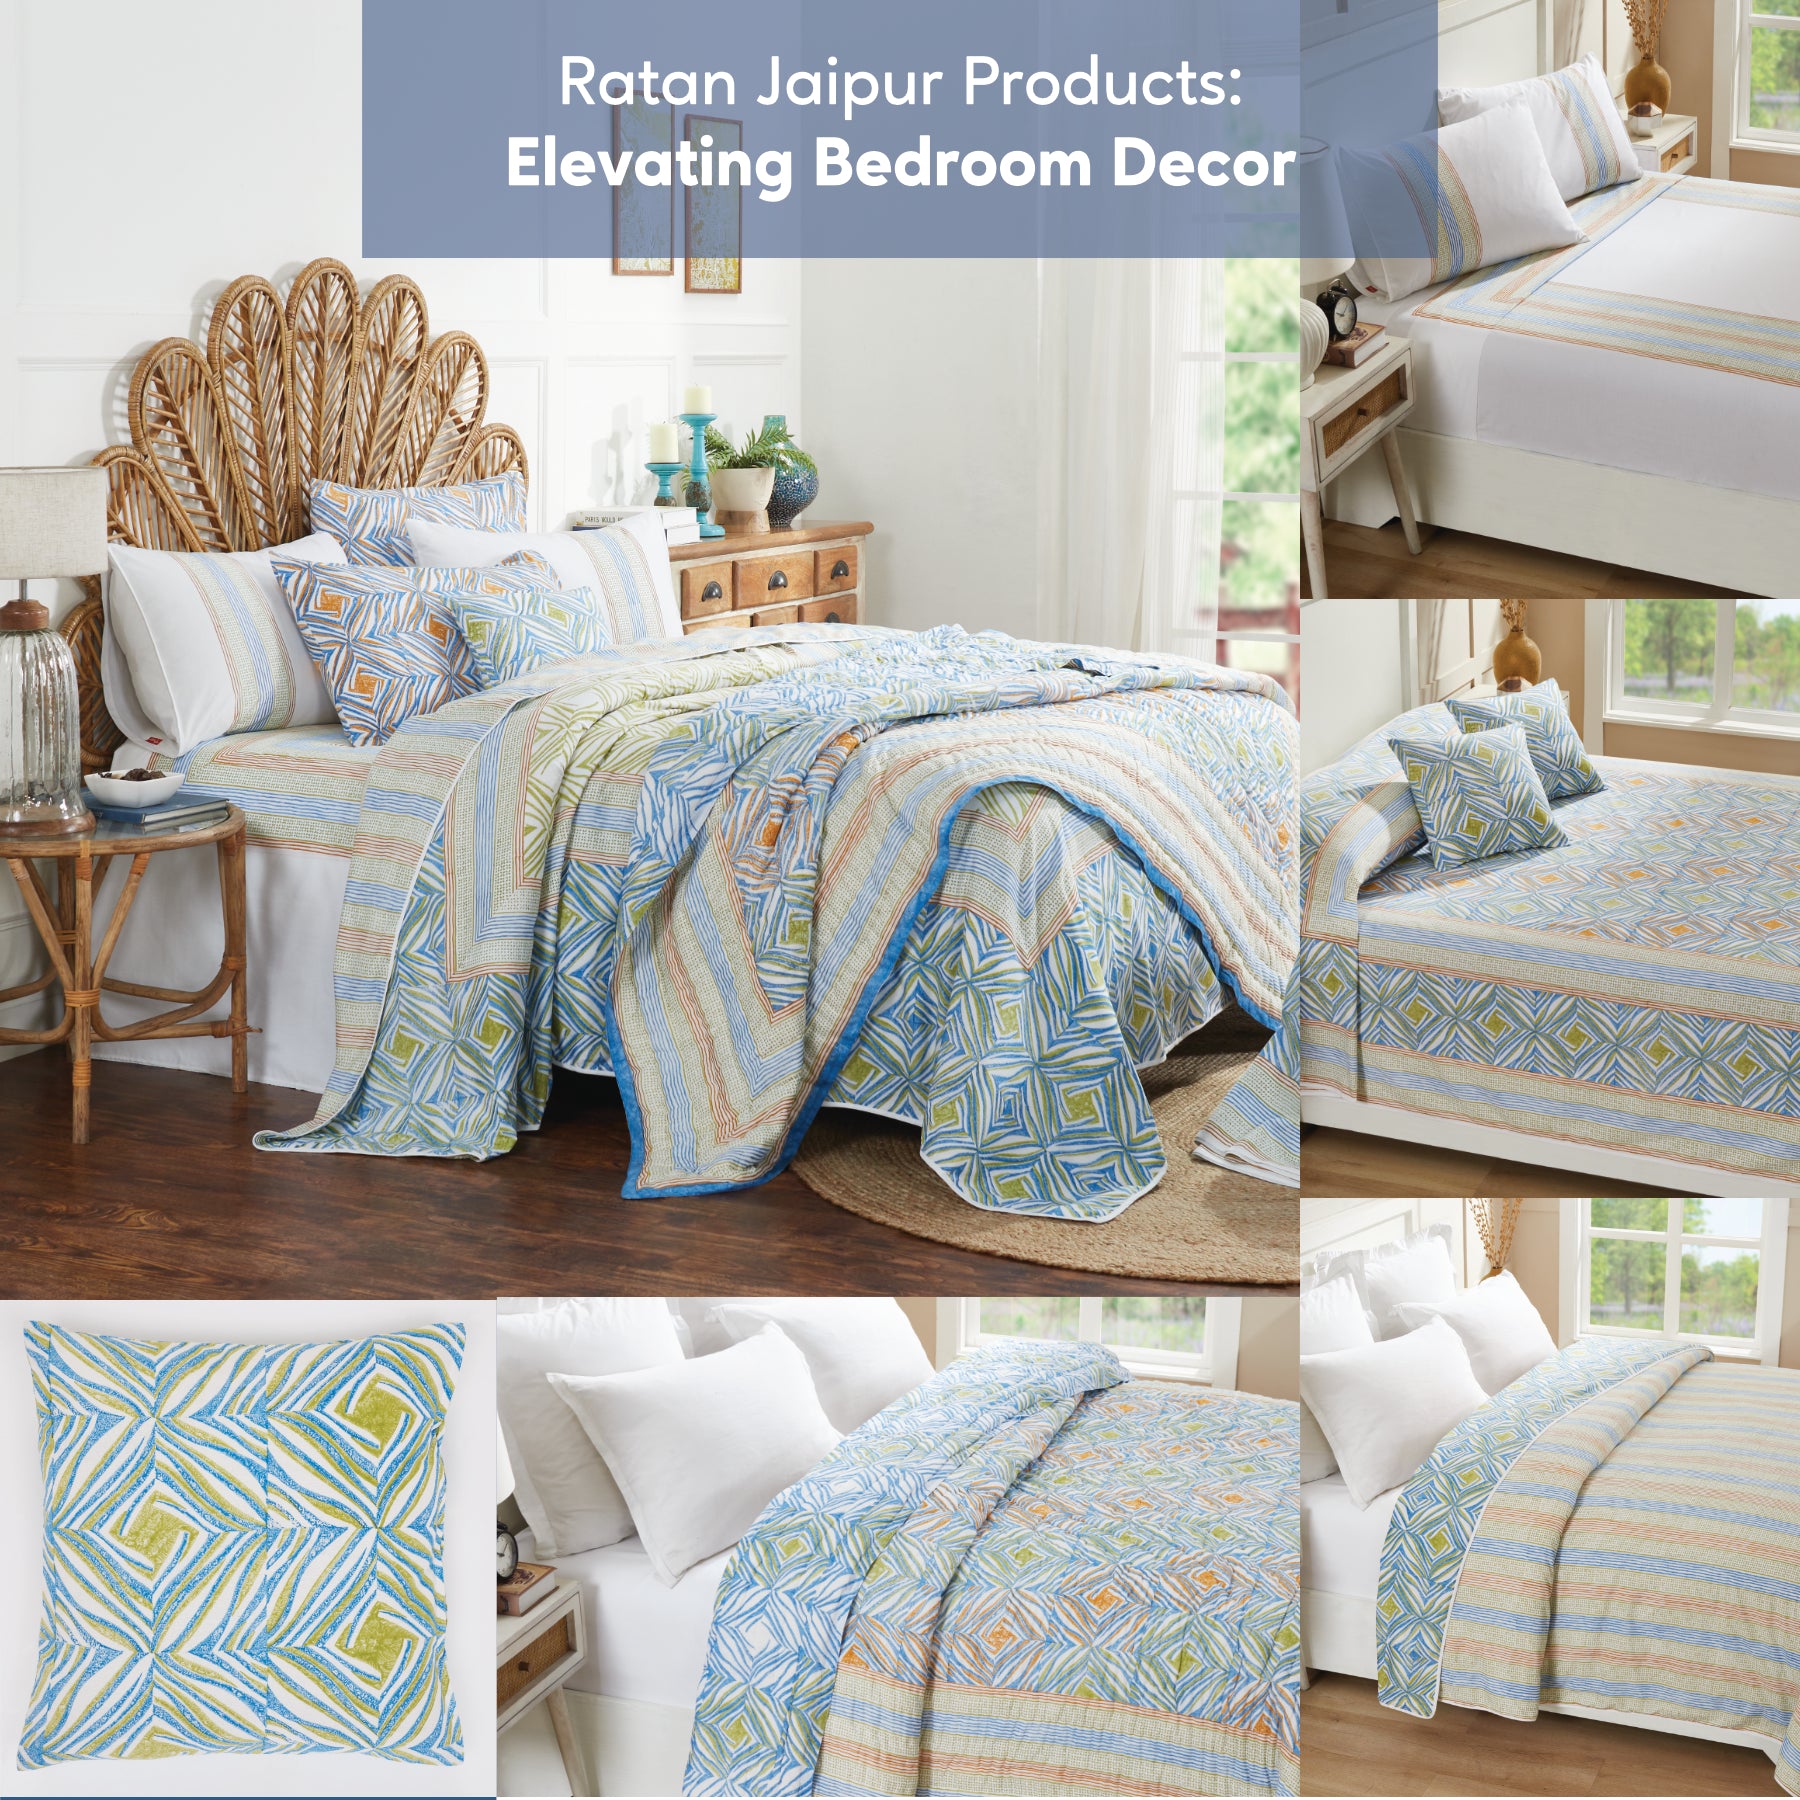 Ratan Jaipur Products: Elevating Bedroom Decor